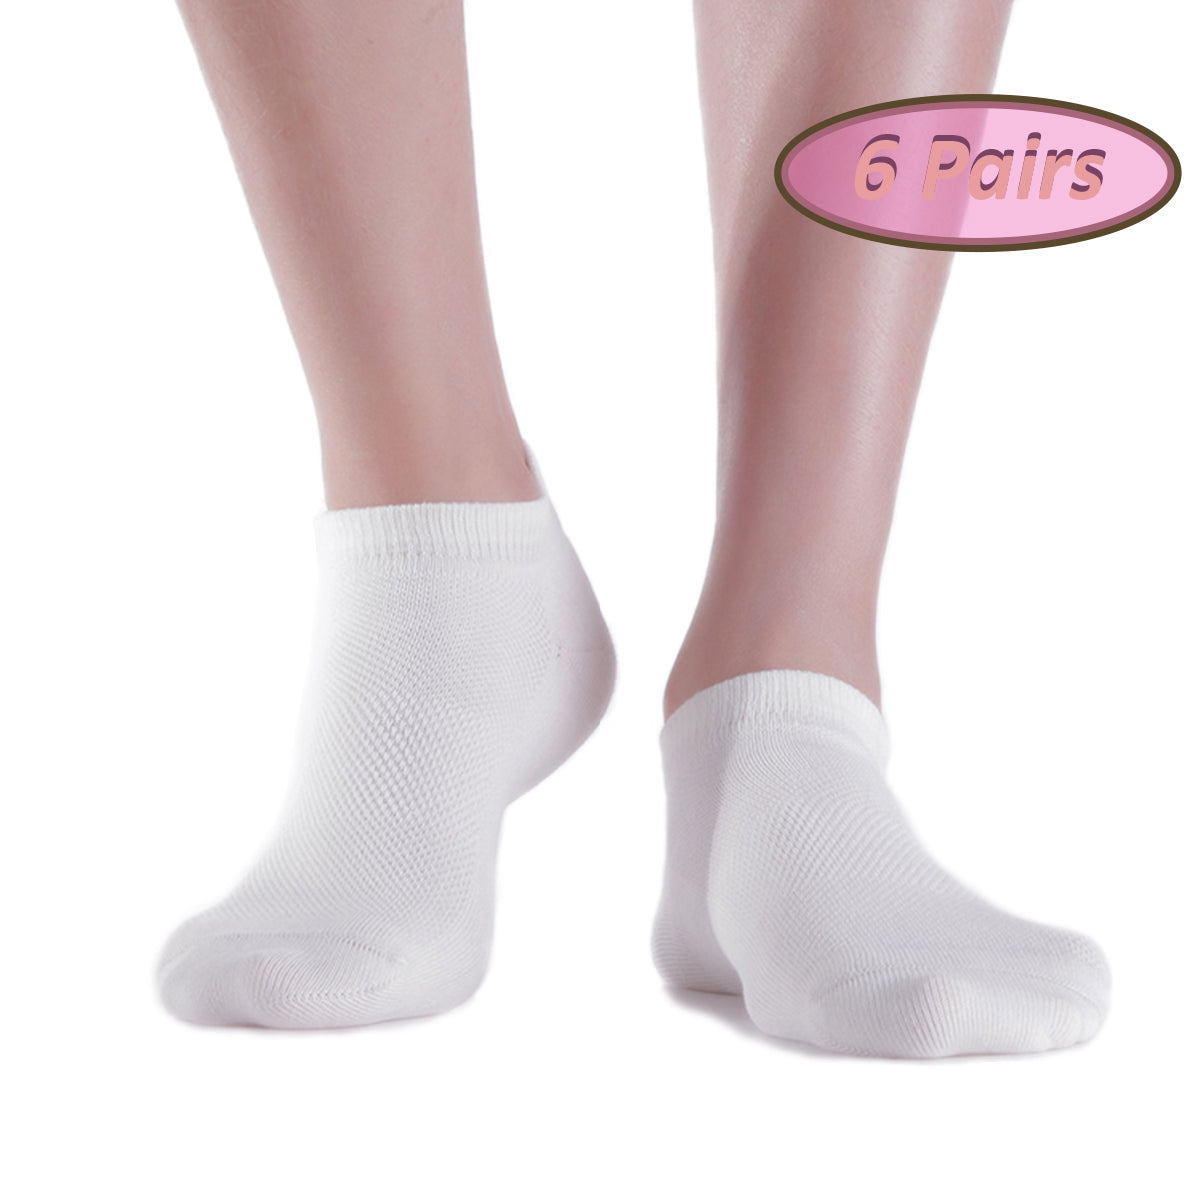 SOLAX 6 pairs summer Invisible socks